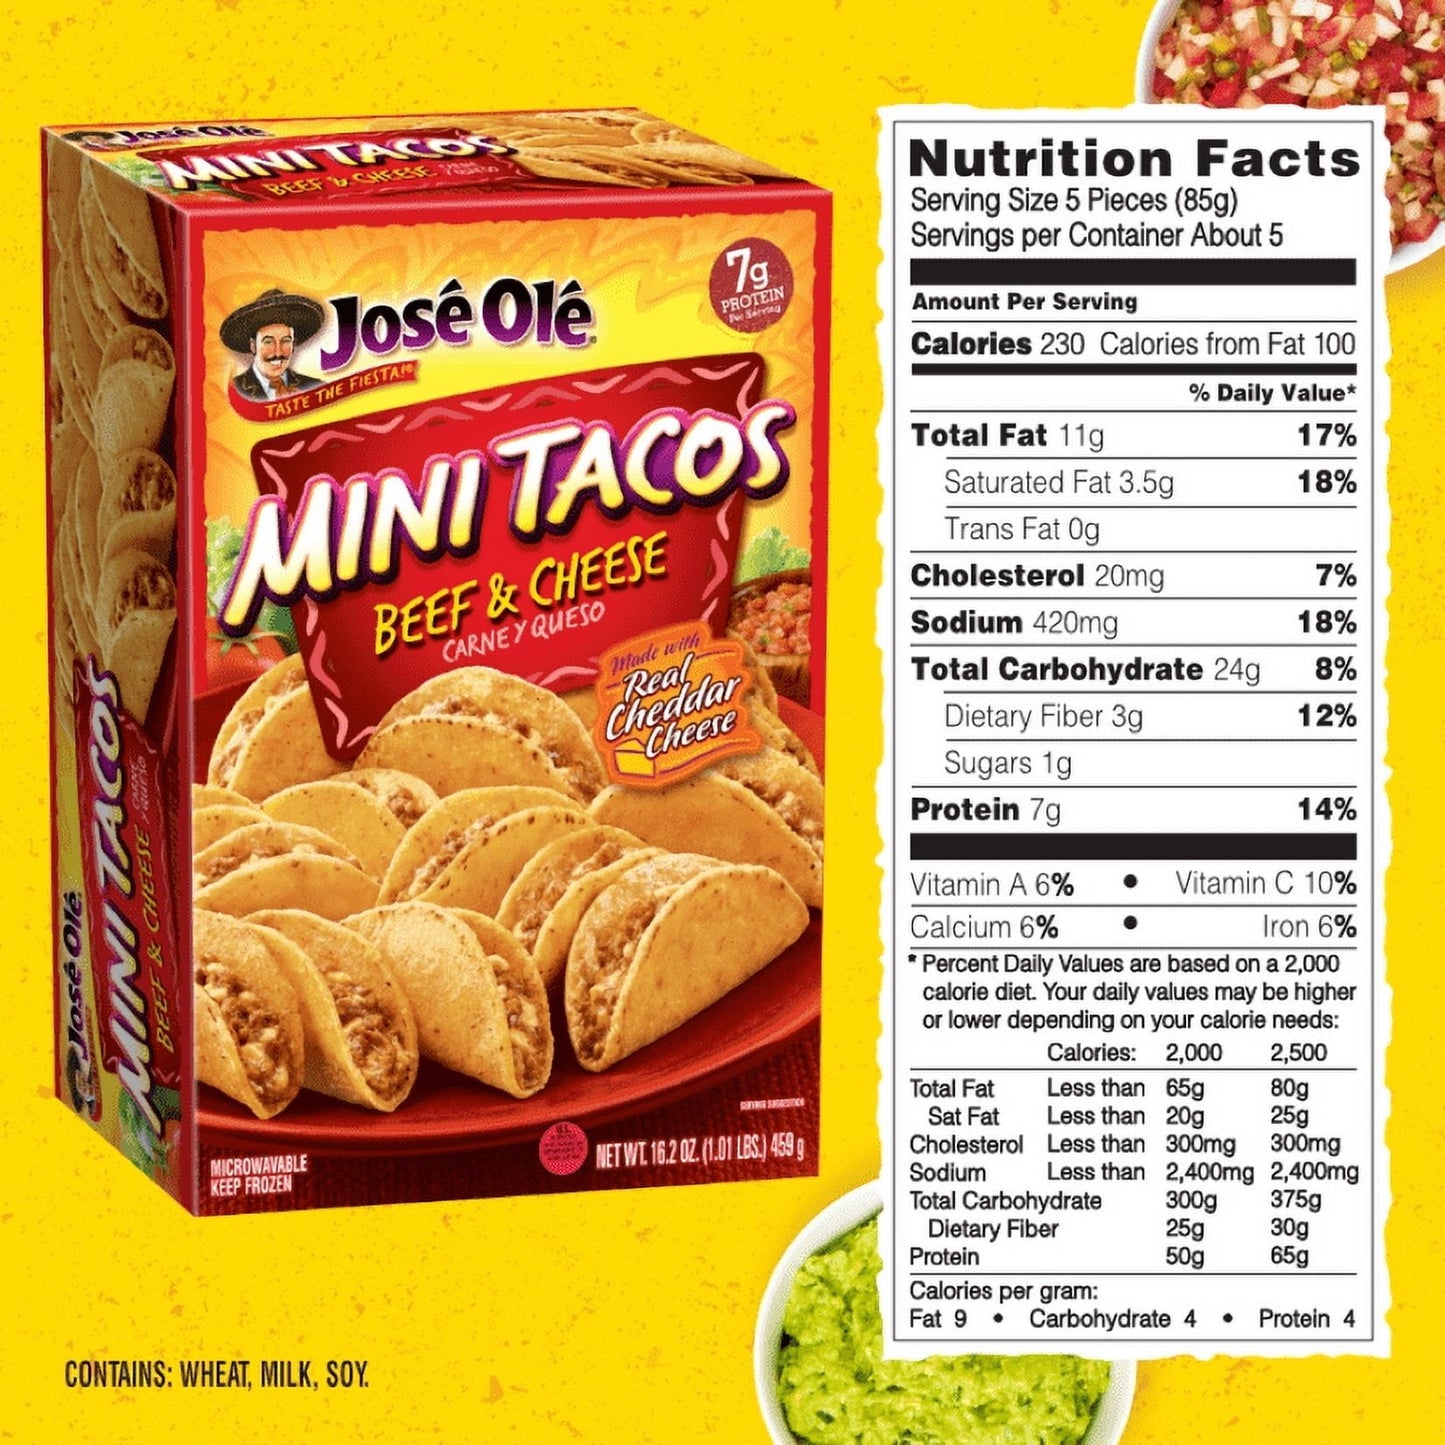 José Olé Beef & Cheese Mini Tacos, 16.2 oz (Frozen)